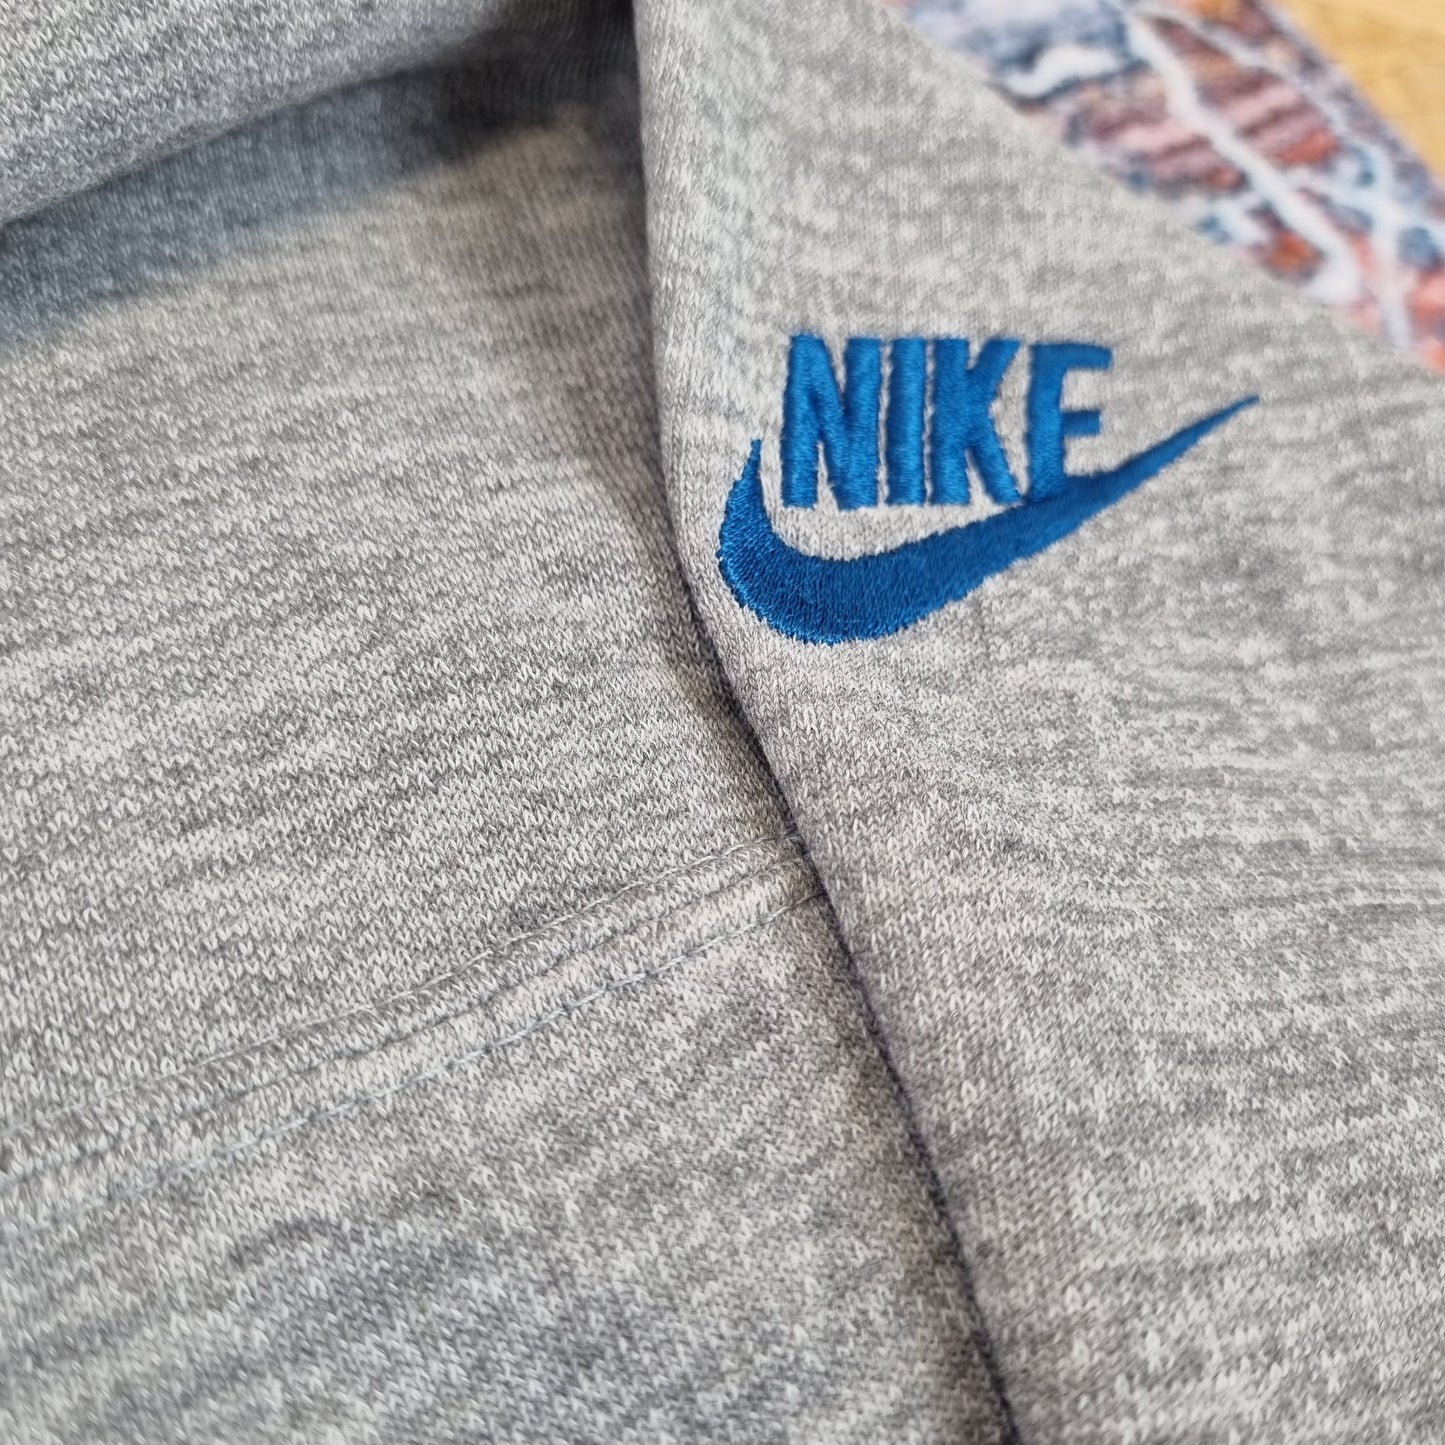 Vintage Nike Spell Out Sweatshirt (XL)